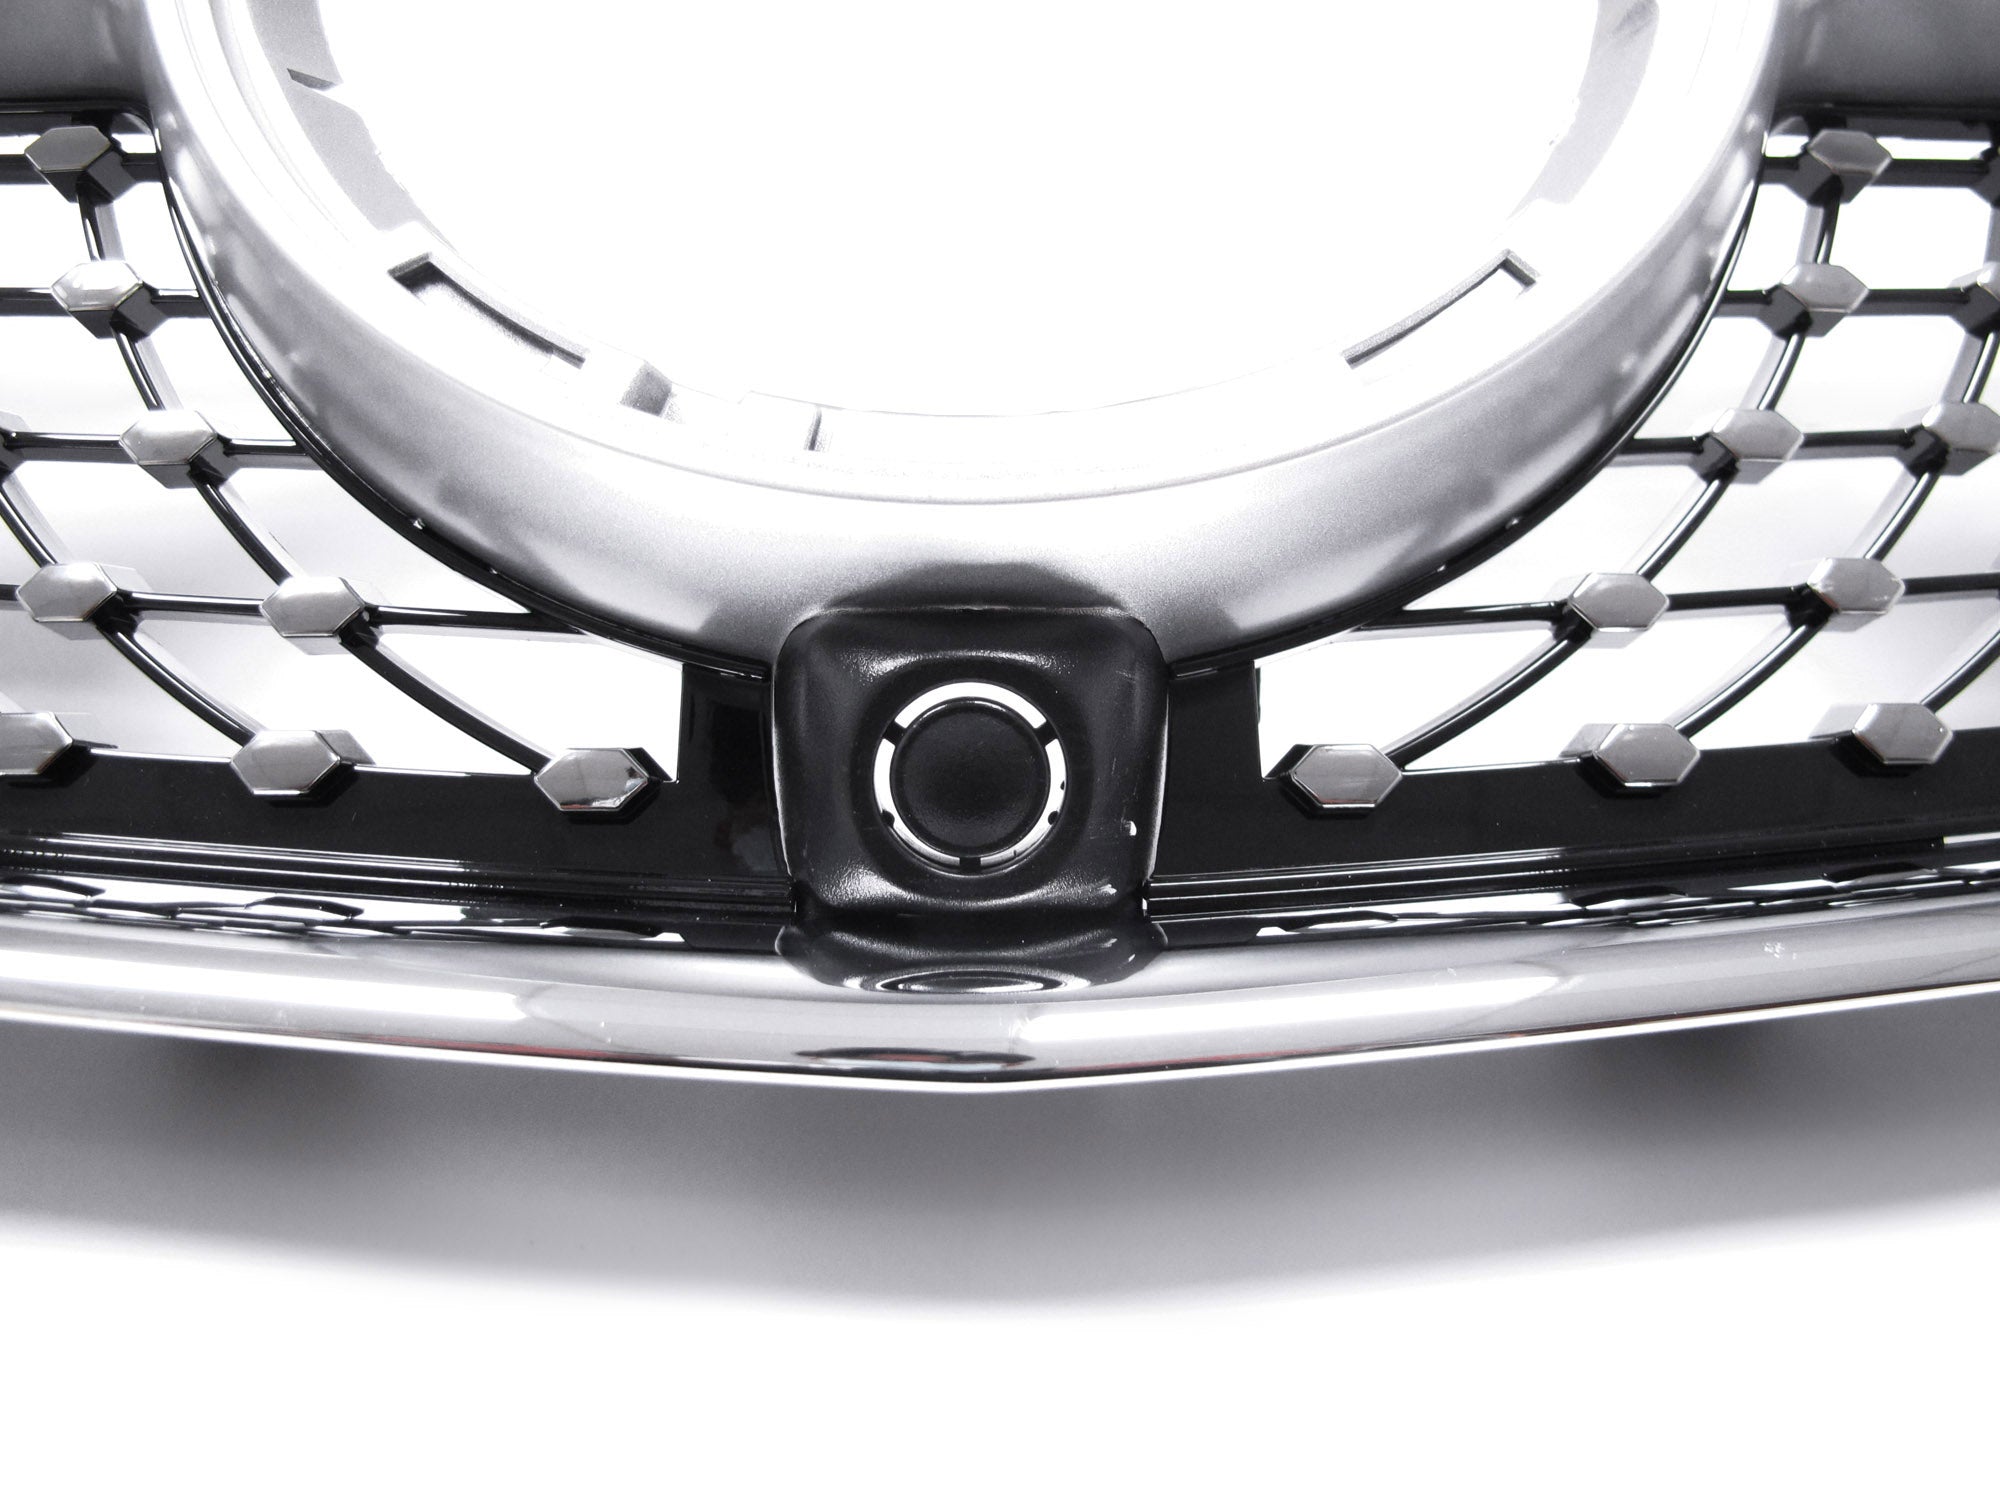 Diamantgrill Kühlergrill Grill für Mercedes Benz V-Klasse W447 2014-2019 vor Mopf